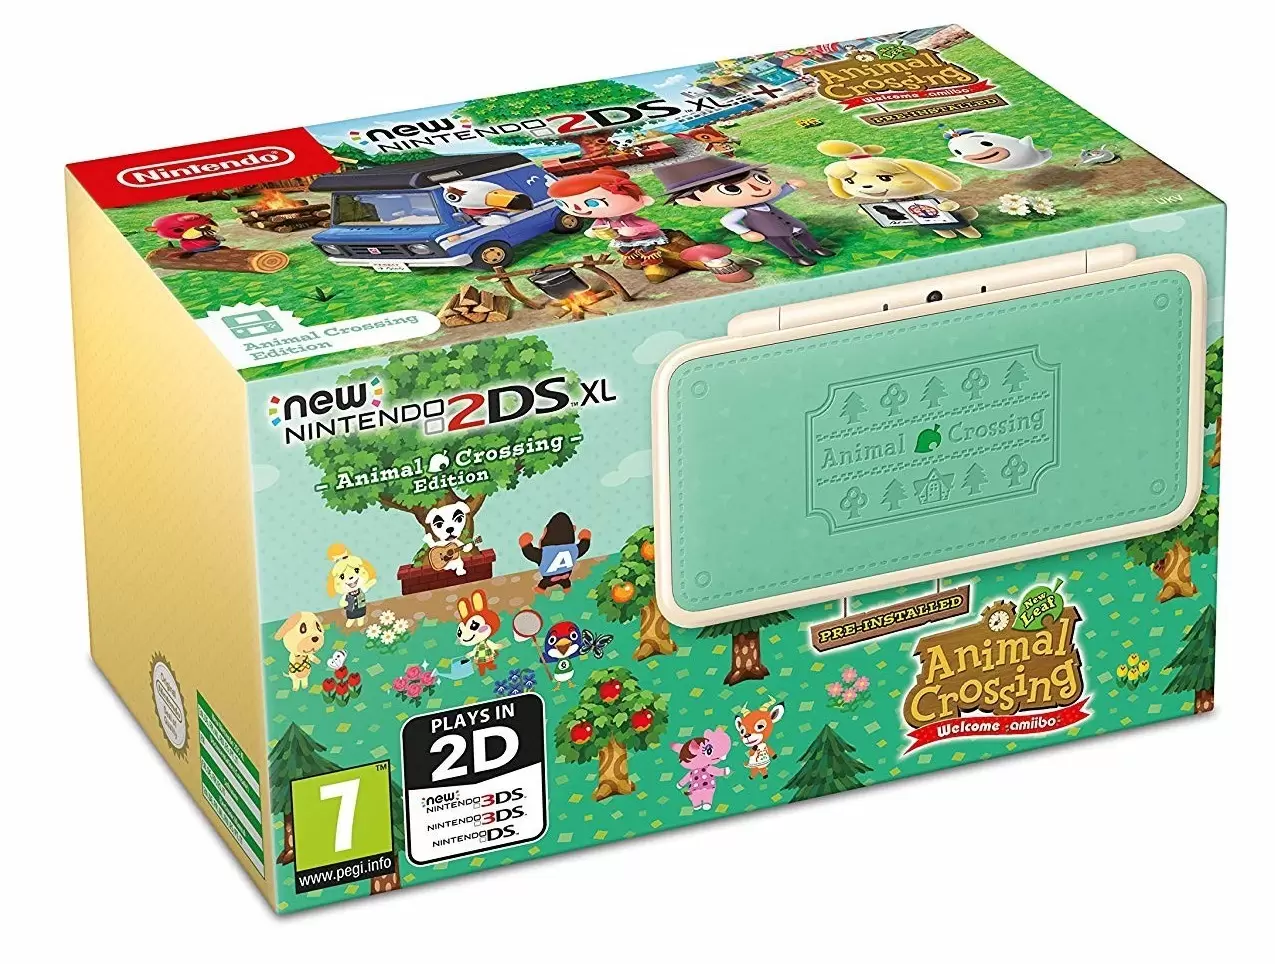 Nintendo 2DS Stuff - New 2DS XL - Animal Crossing Edition